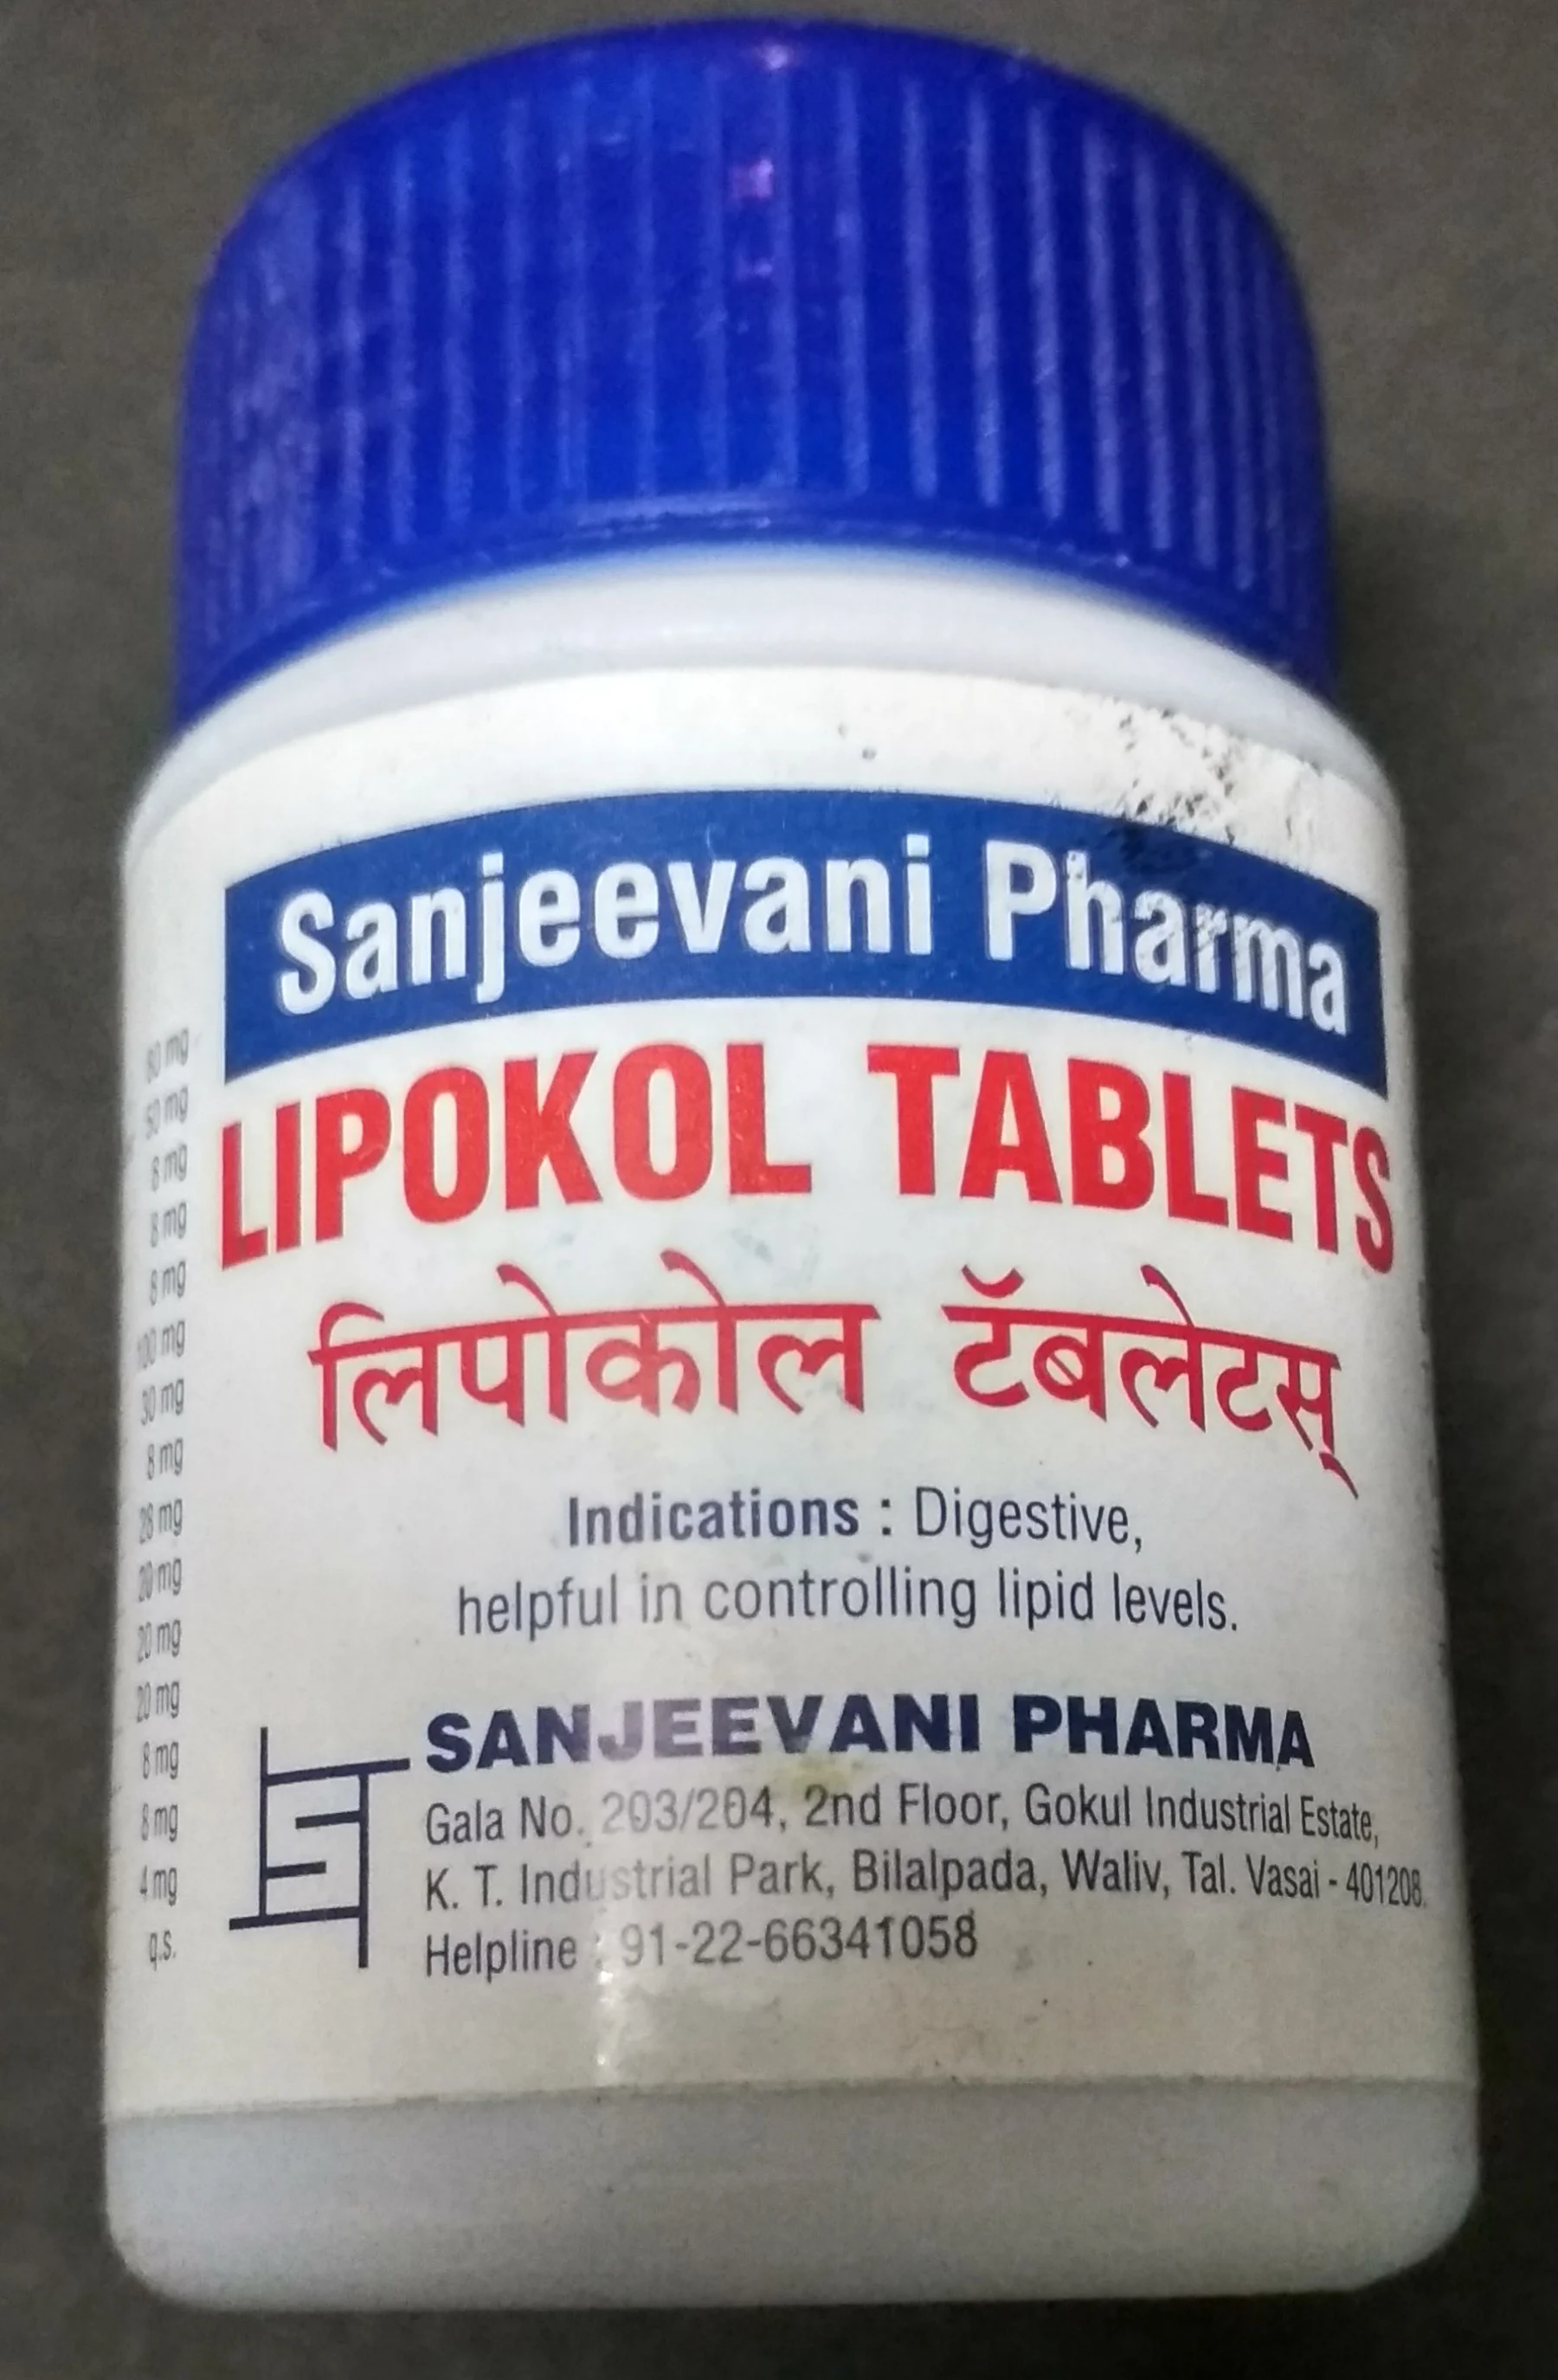 lipokol 60tab upto 20% off sanjeevani pharma mumbai